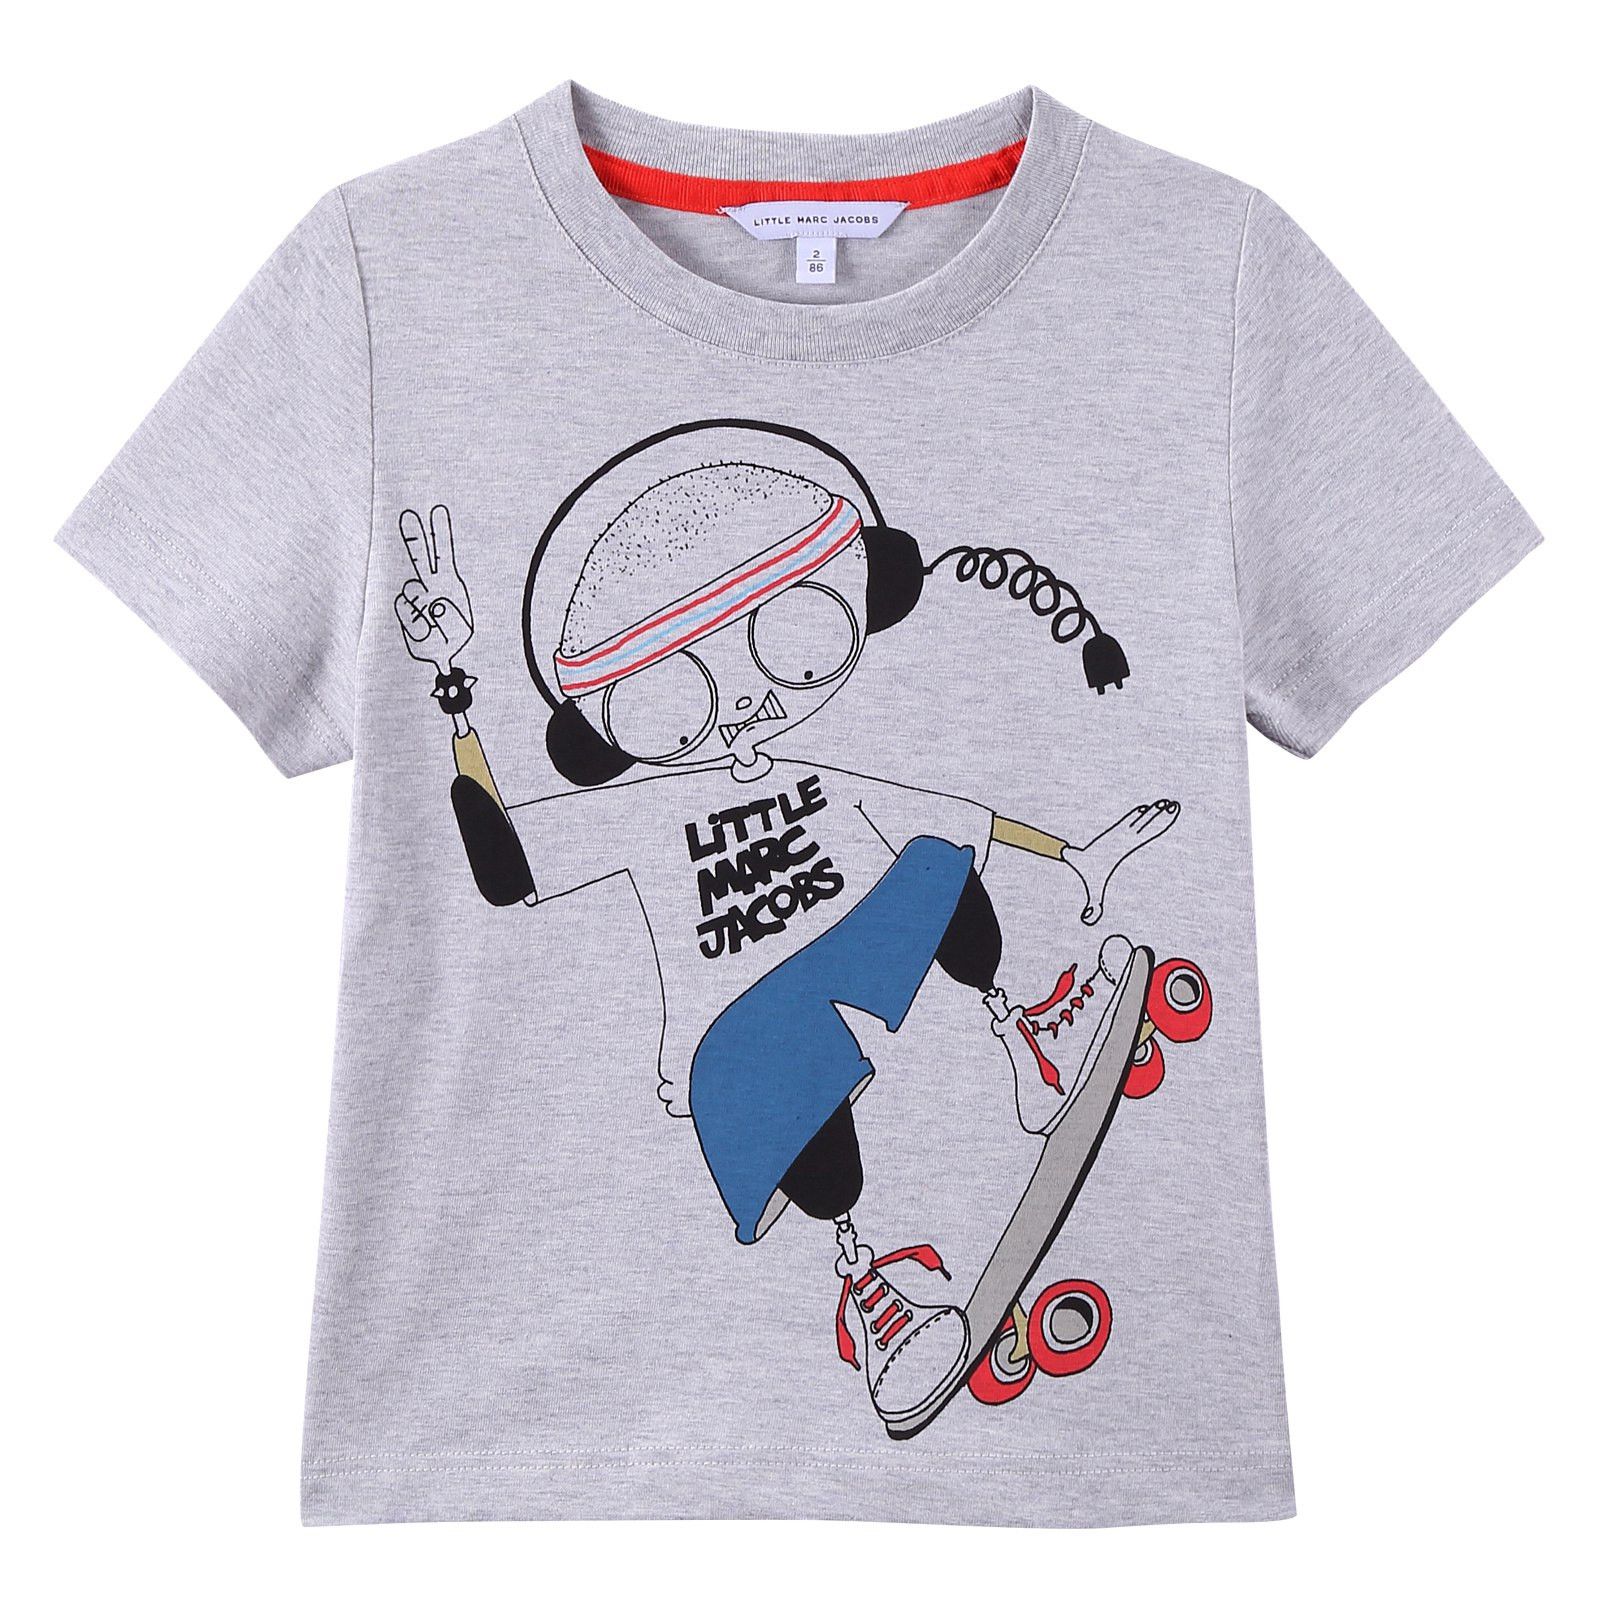 Boys Grey 'Mr Marc' Printed Cotton Jersey T-Shirt - CÉMAROSE | Children's Fashion Store - 1